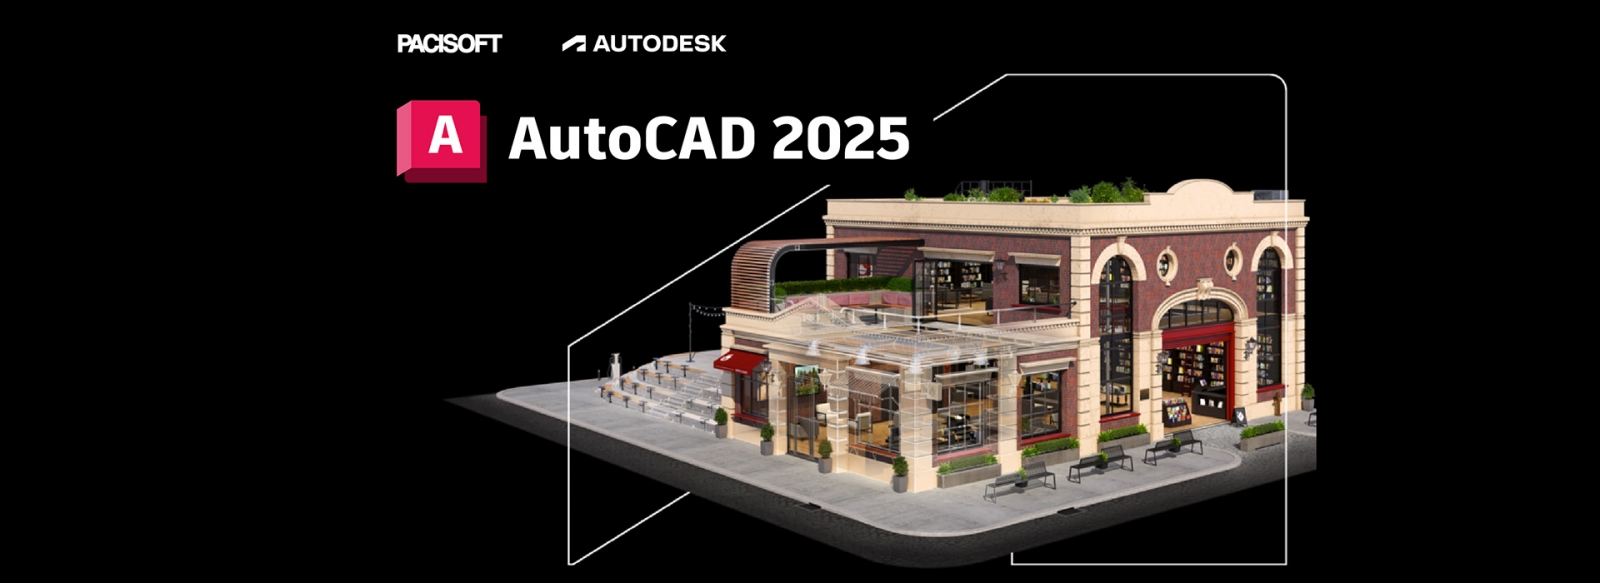 Giới thiệu AutoCAD 2025